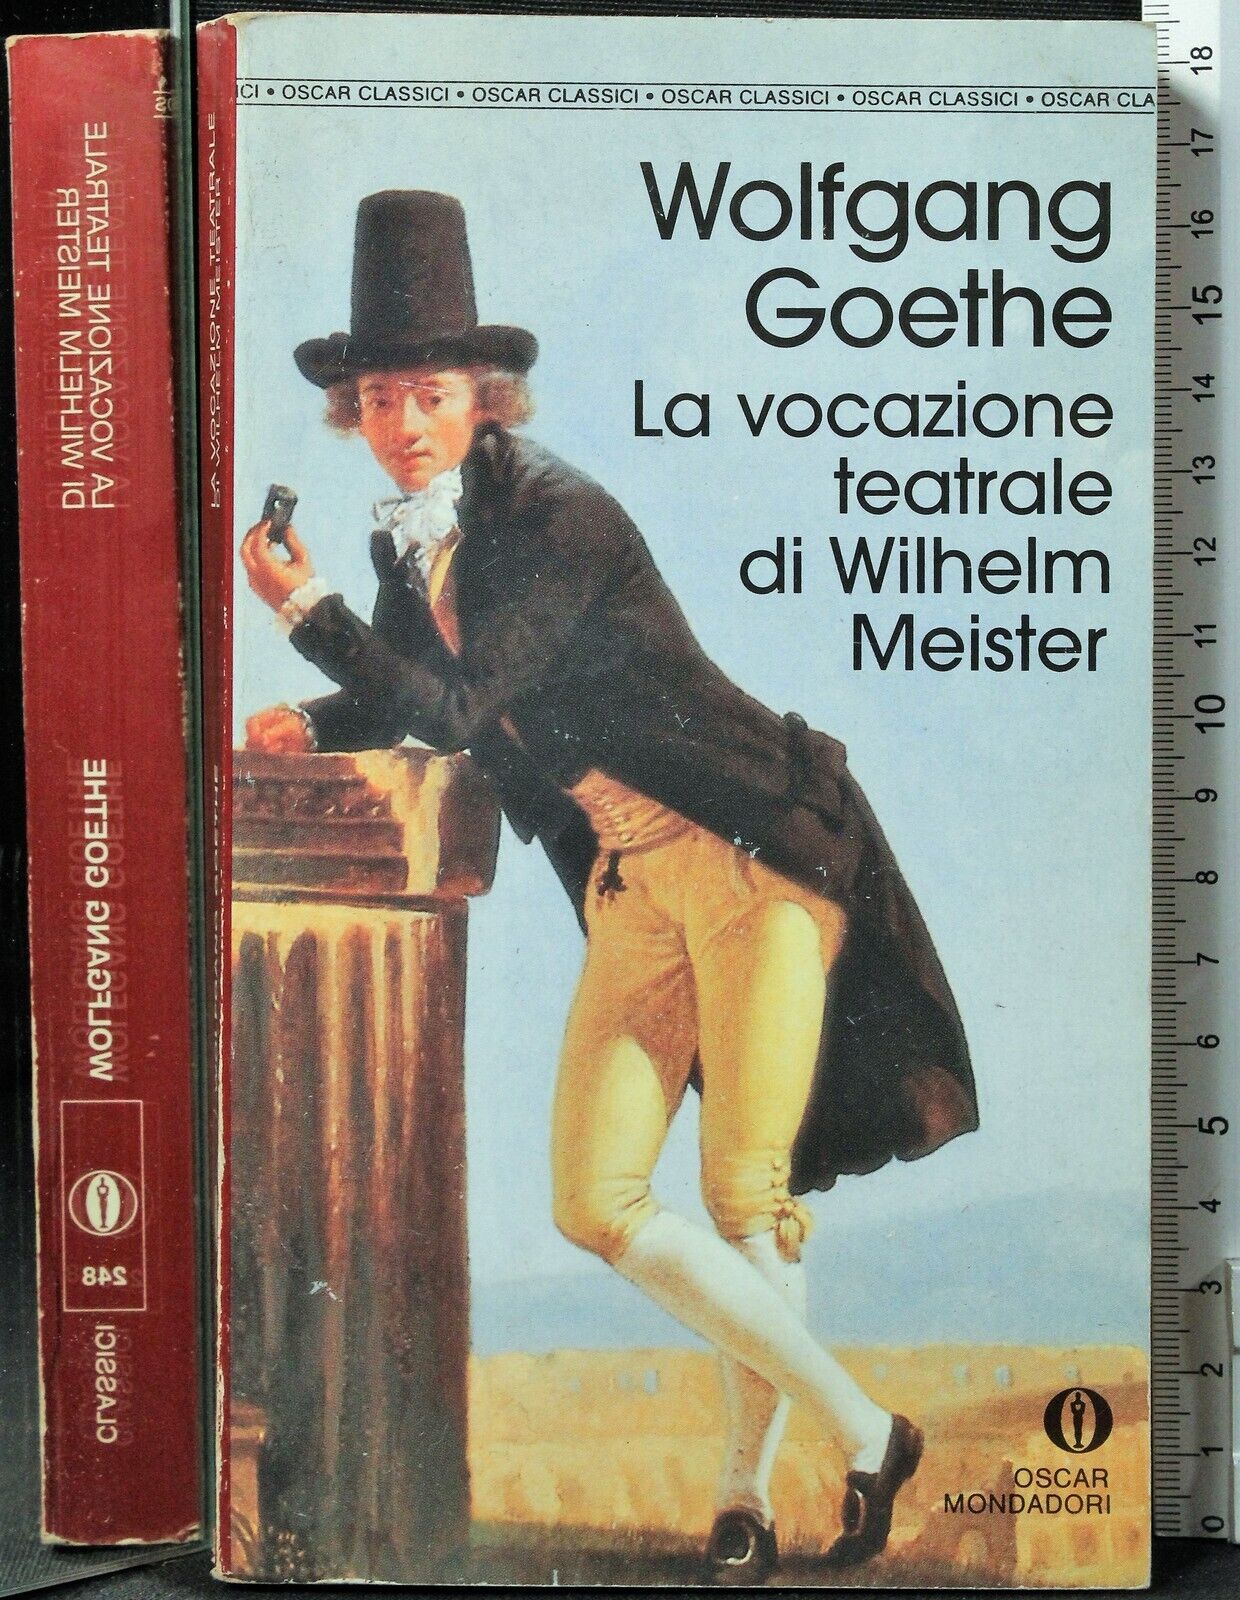 La vocazione teatrale di Wilhelm Meister - Wolfgang Goethe